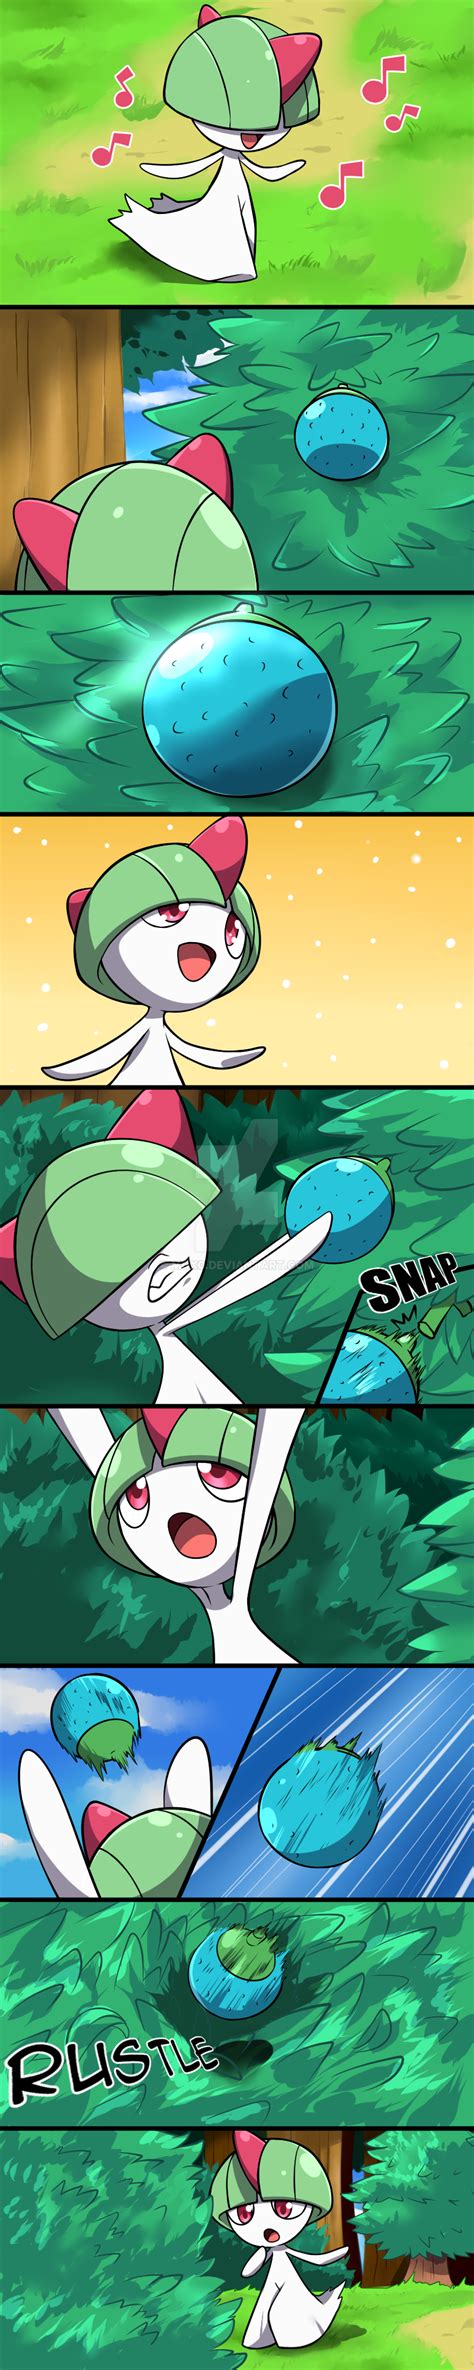 pokemon fateful encounter page 1 by mgx0 on deviantart